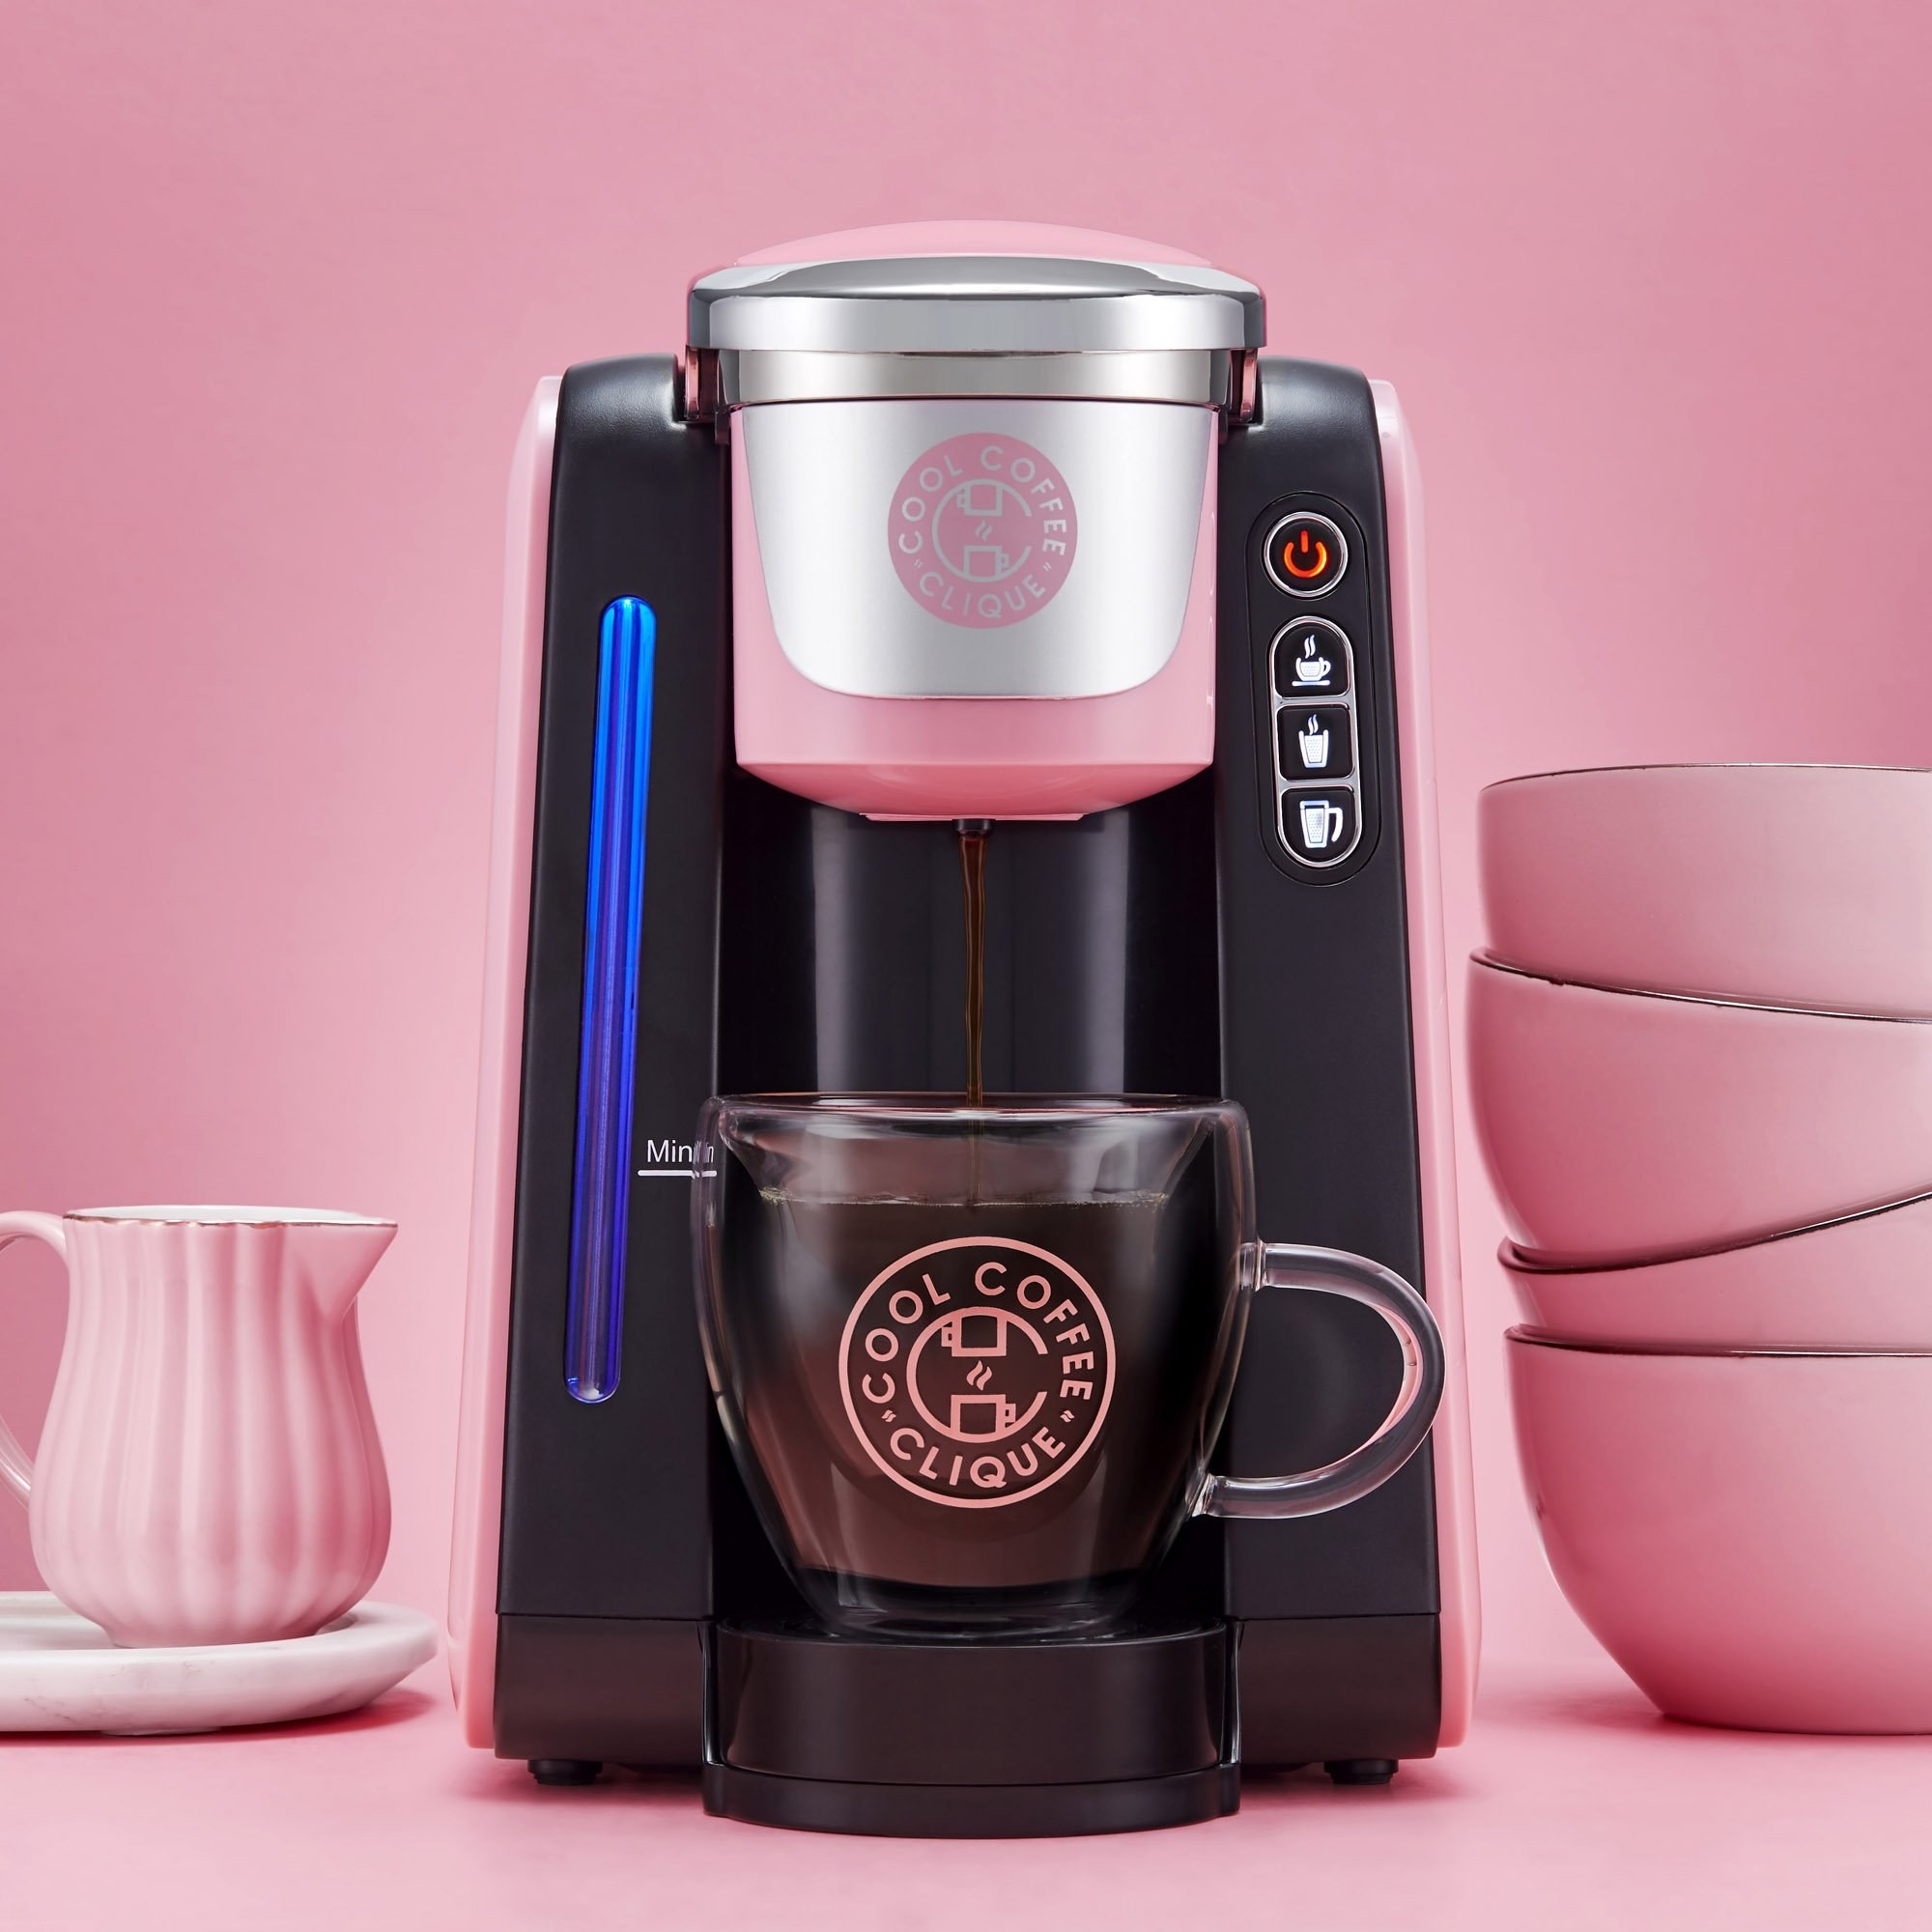 A black and pink coffee machine pouring coffee into a glass mug